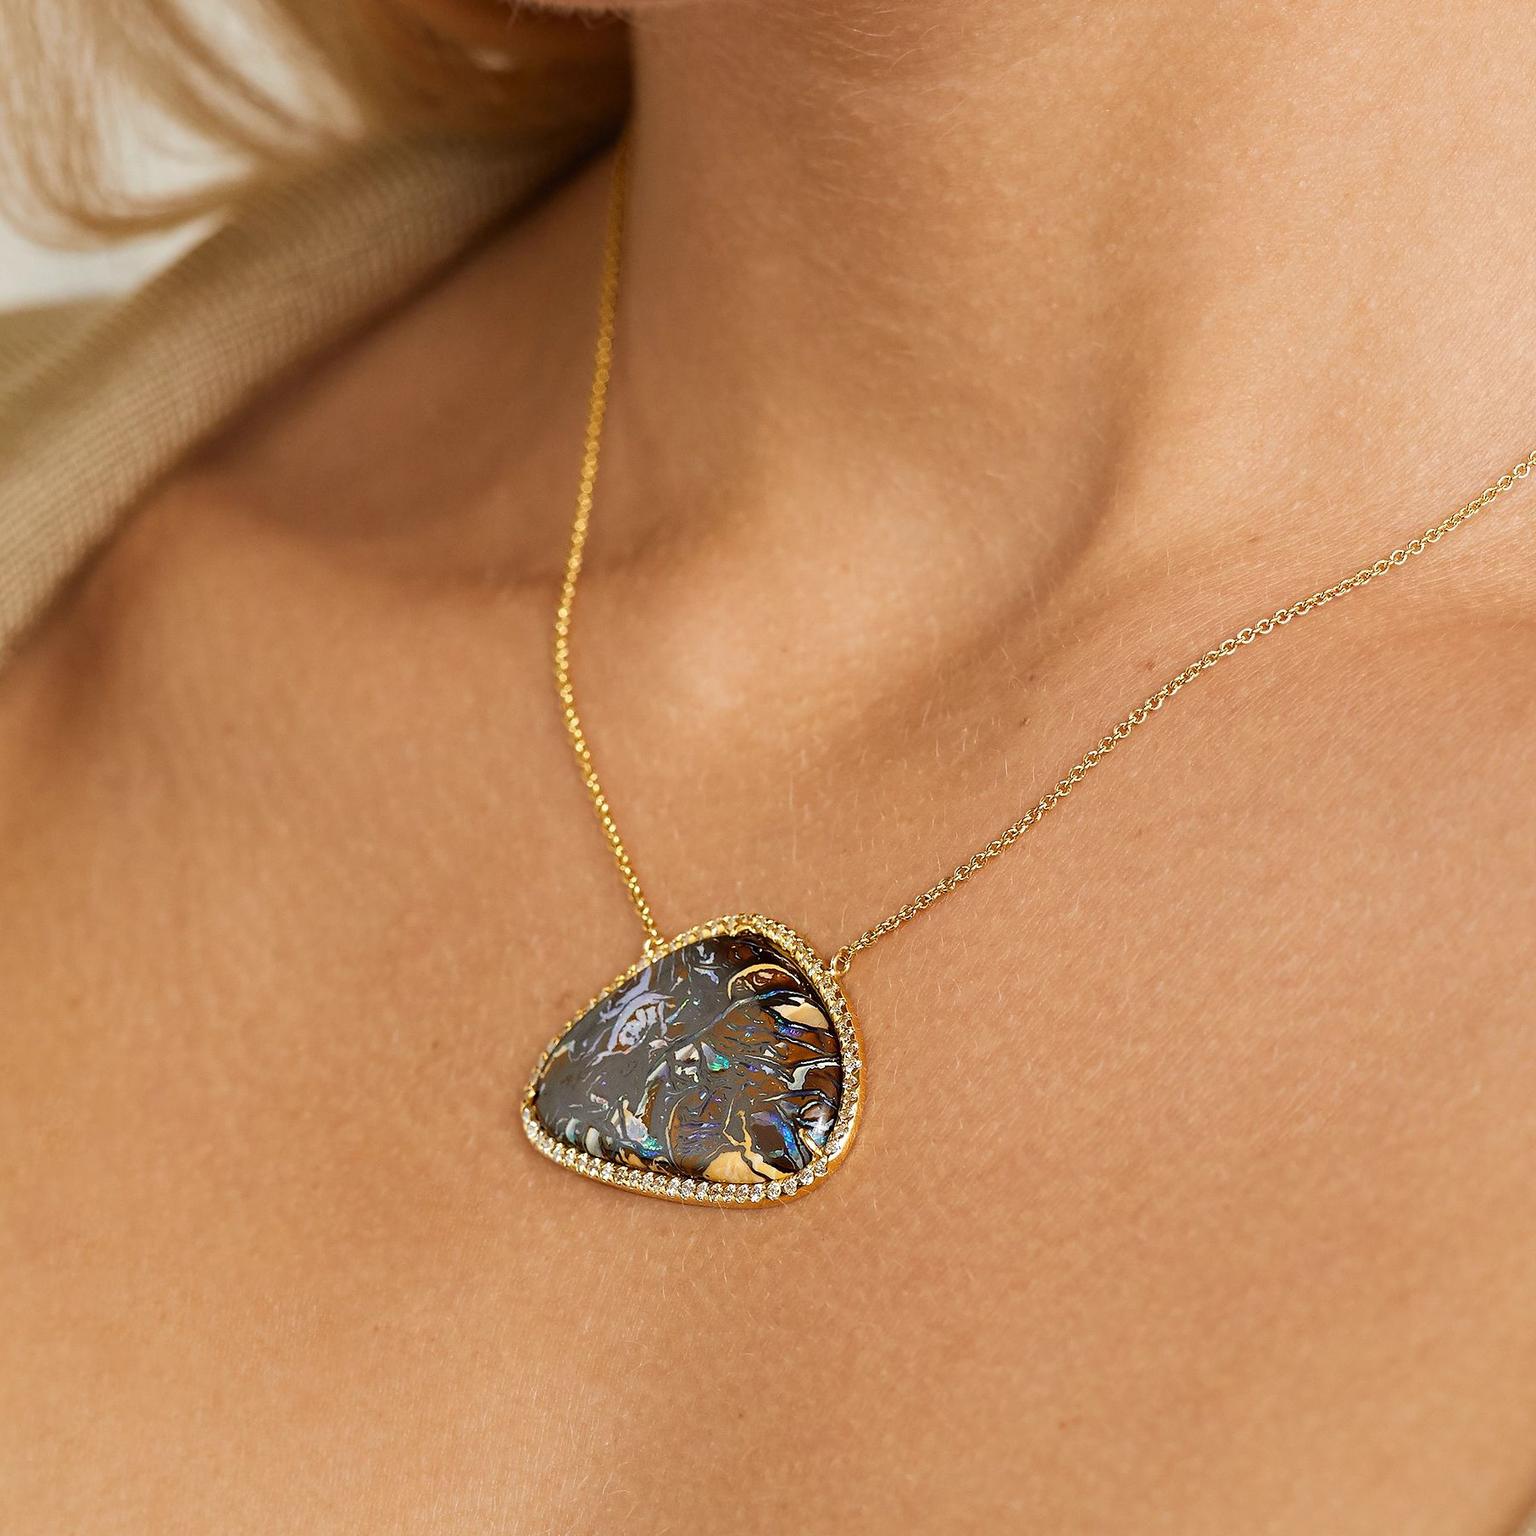 Kimberly McDonald 18-karat gold, opal and diamond necklace on model